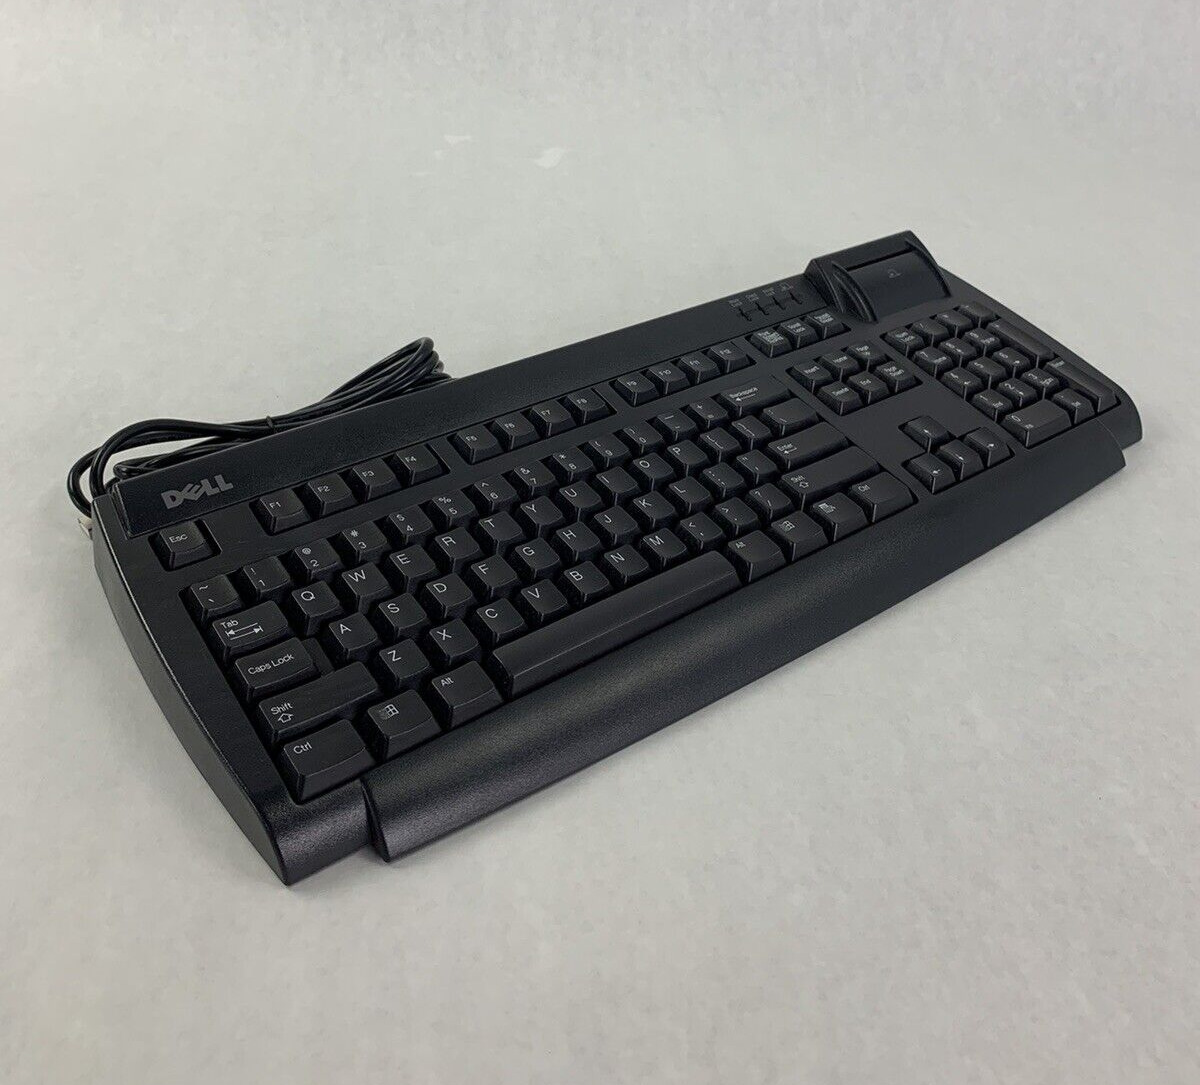 Genuine Dell Smart Card Reader Keyboard SK-3106 Wired USB G0842